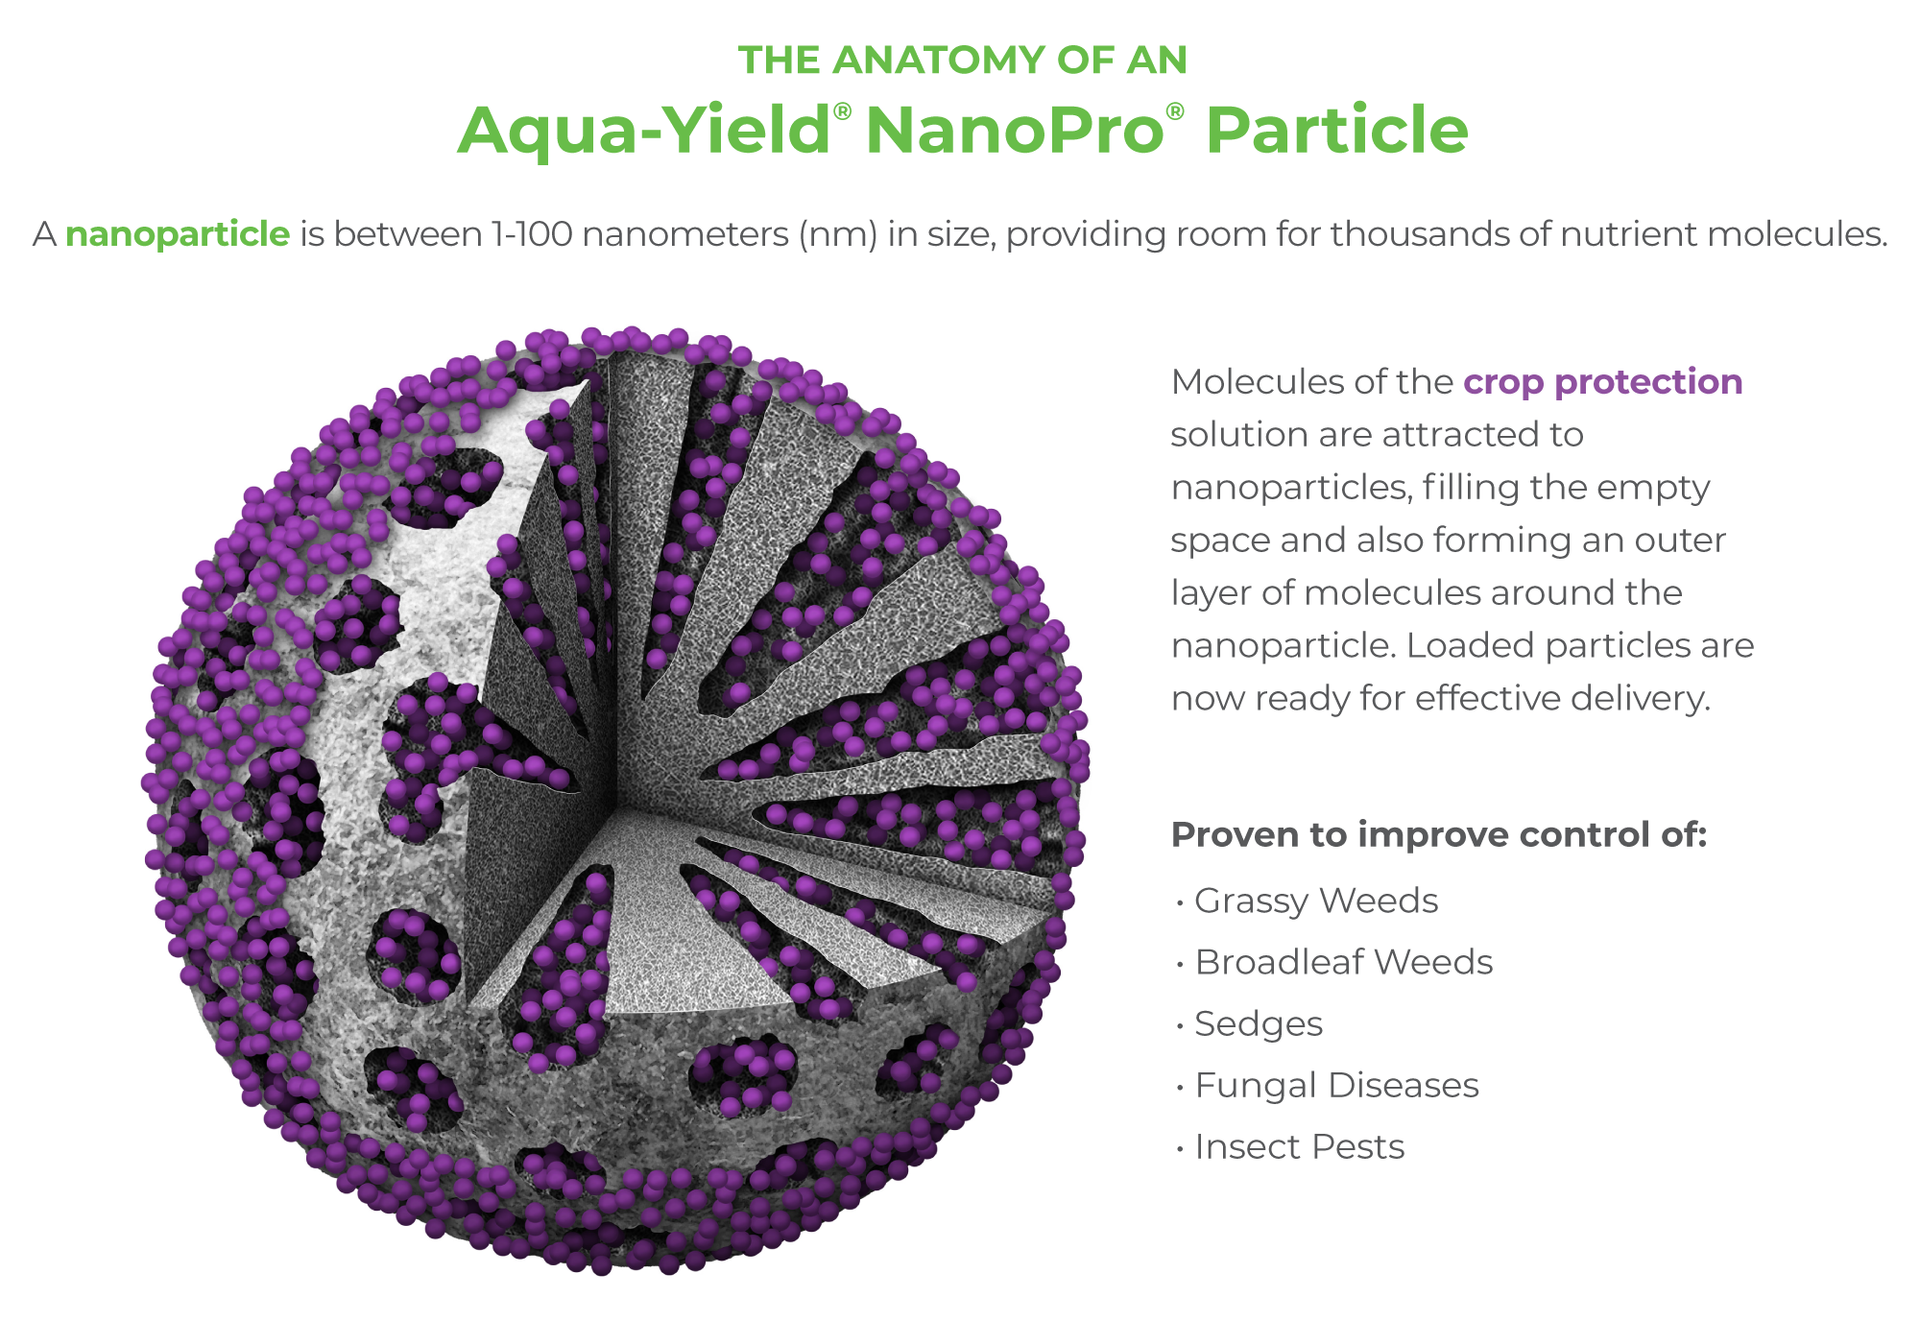 Aqua-Yield NanoPro Particle